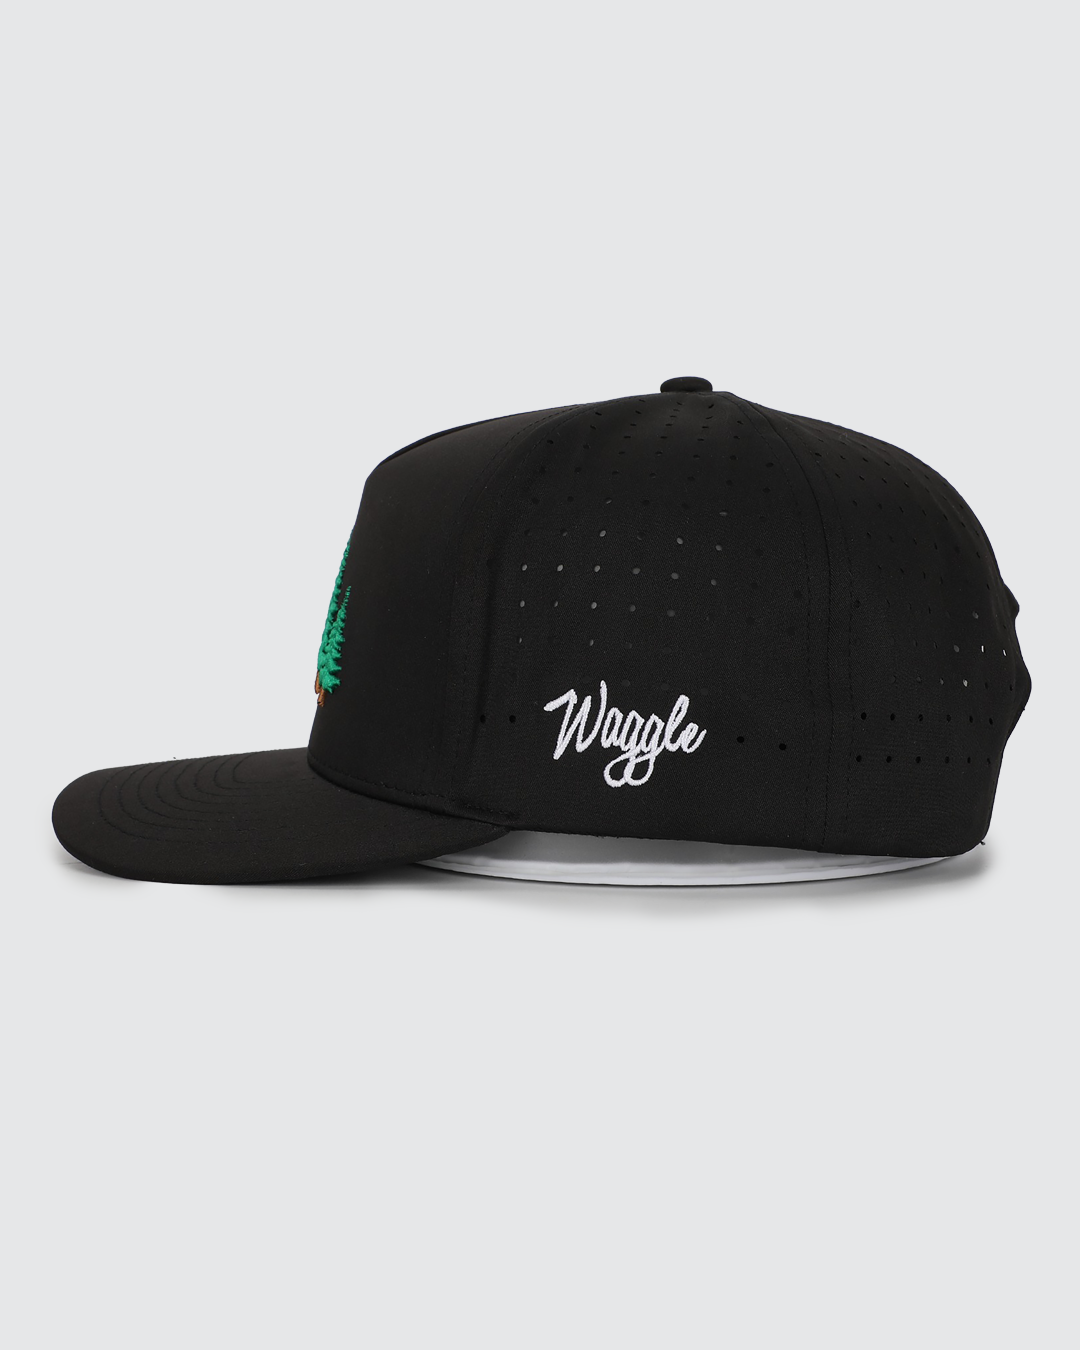 Waggle Black Hat